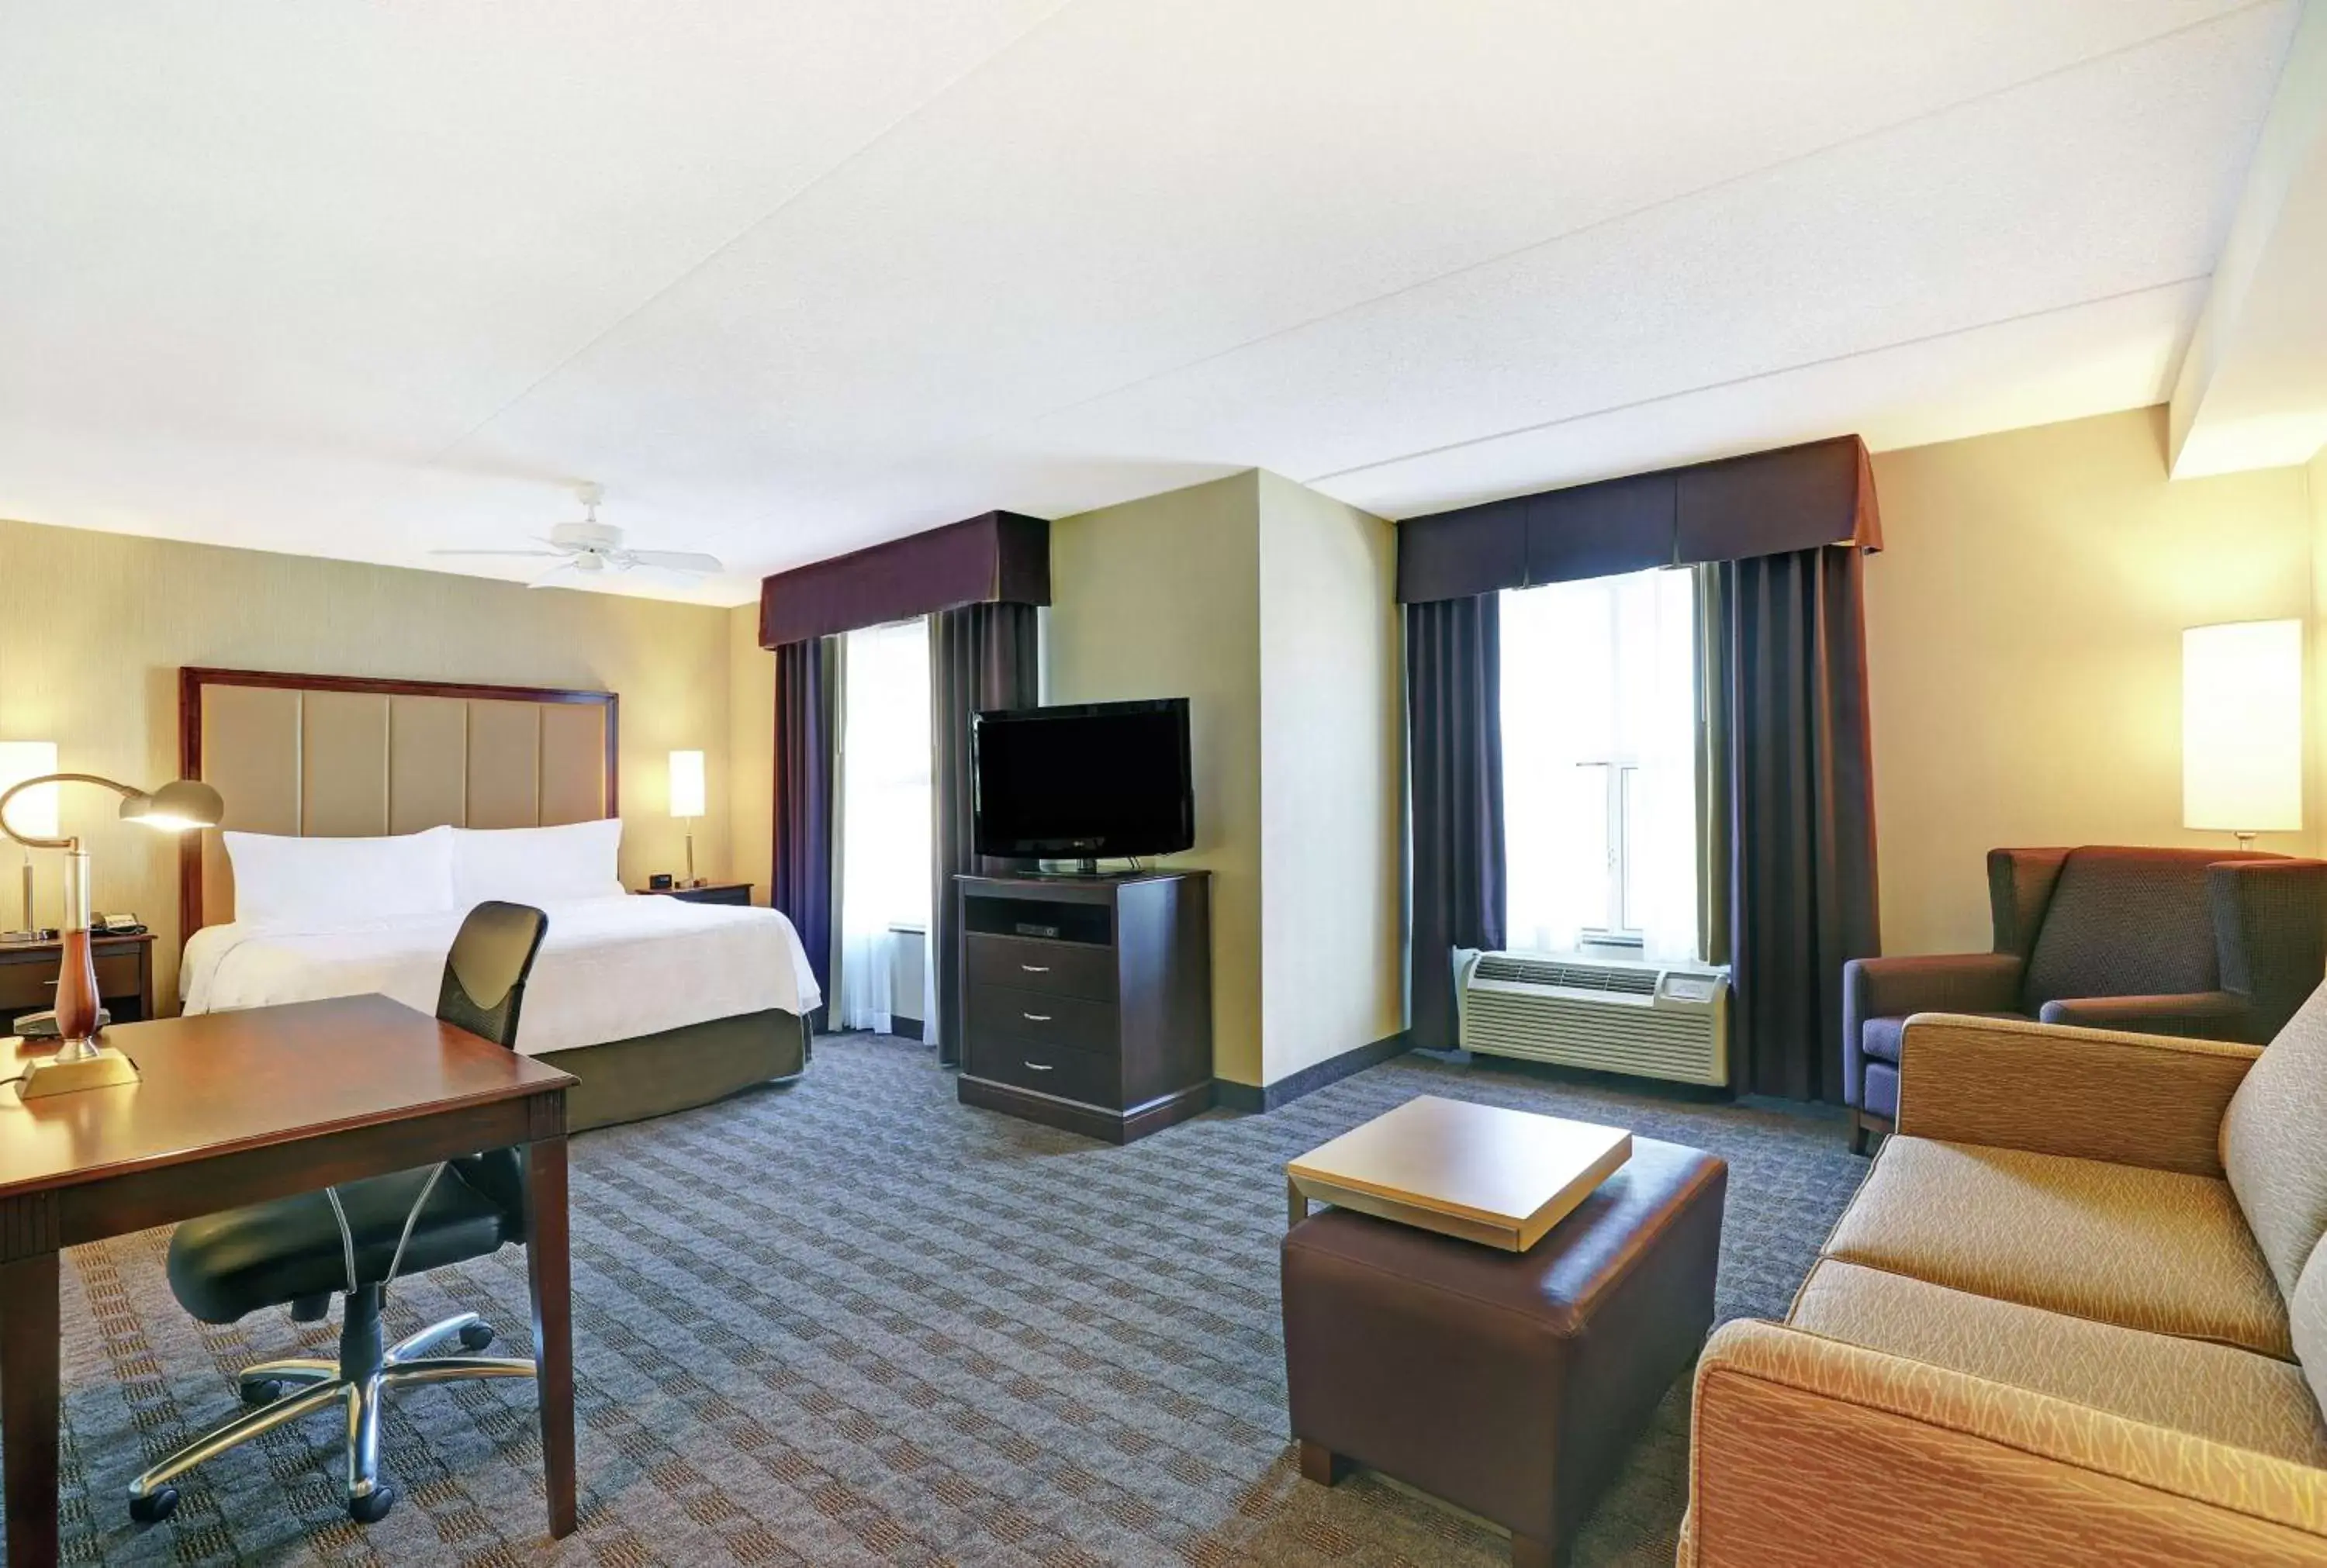 Bedroom, Seating Area in Homewood Suites by Hilton Cambridge-Waterloo, Ontario